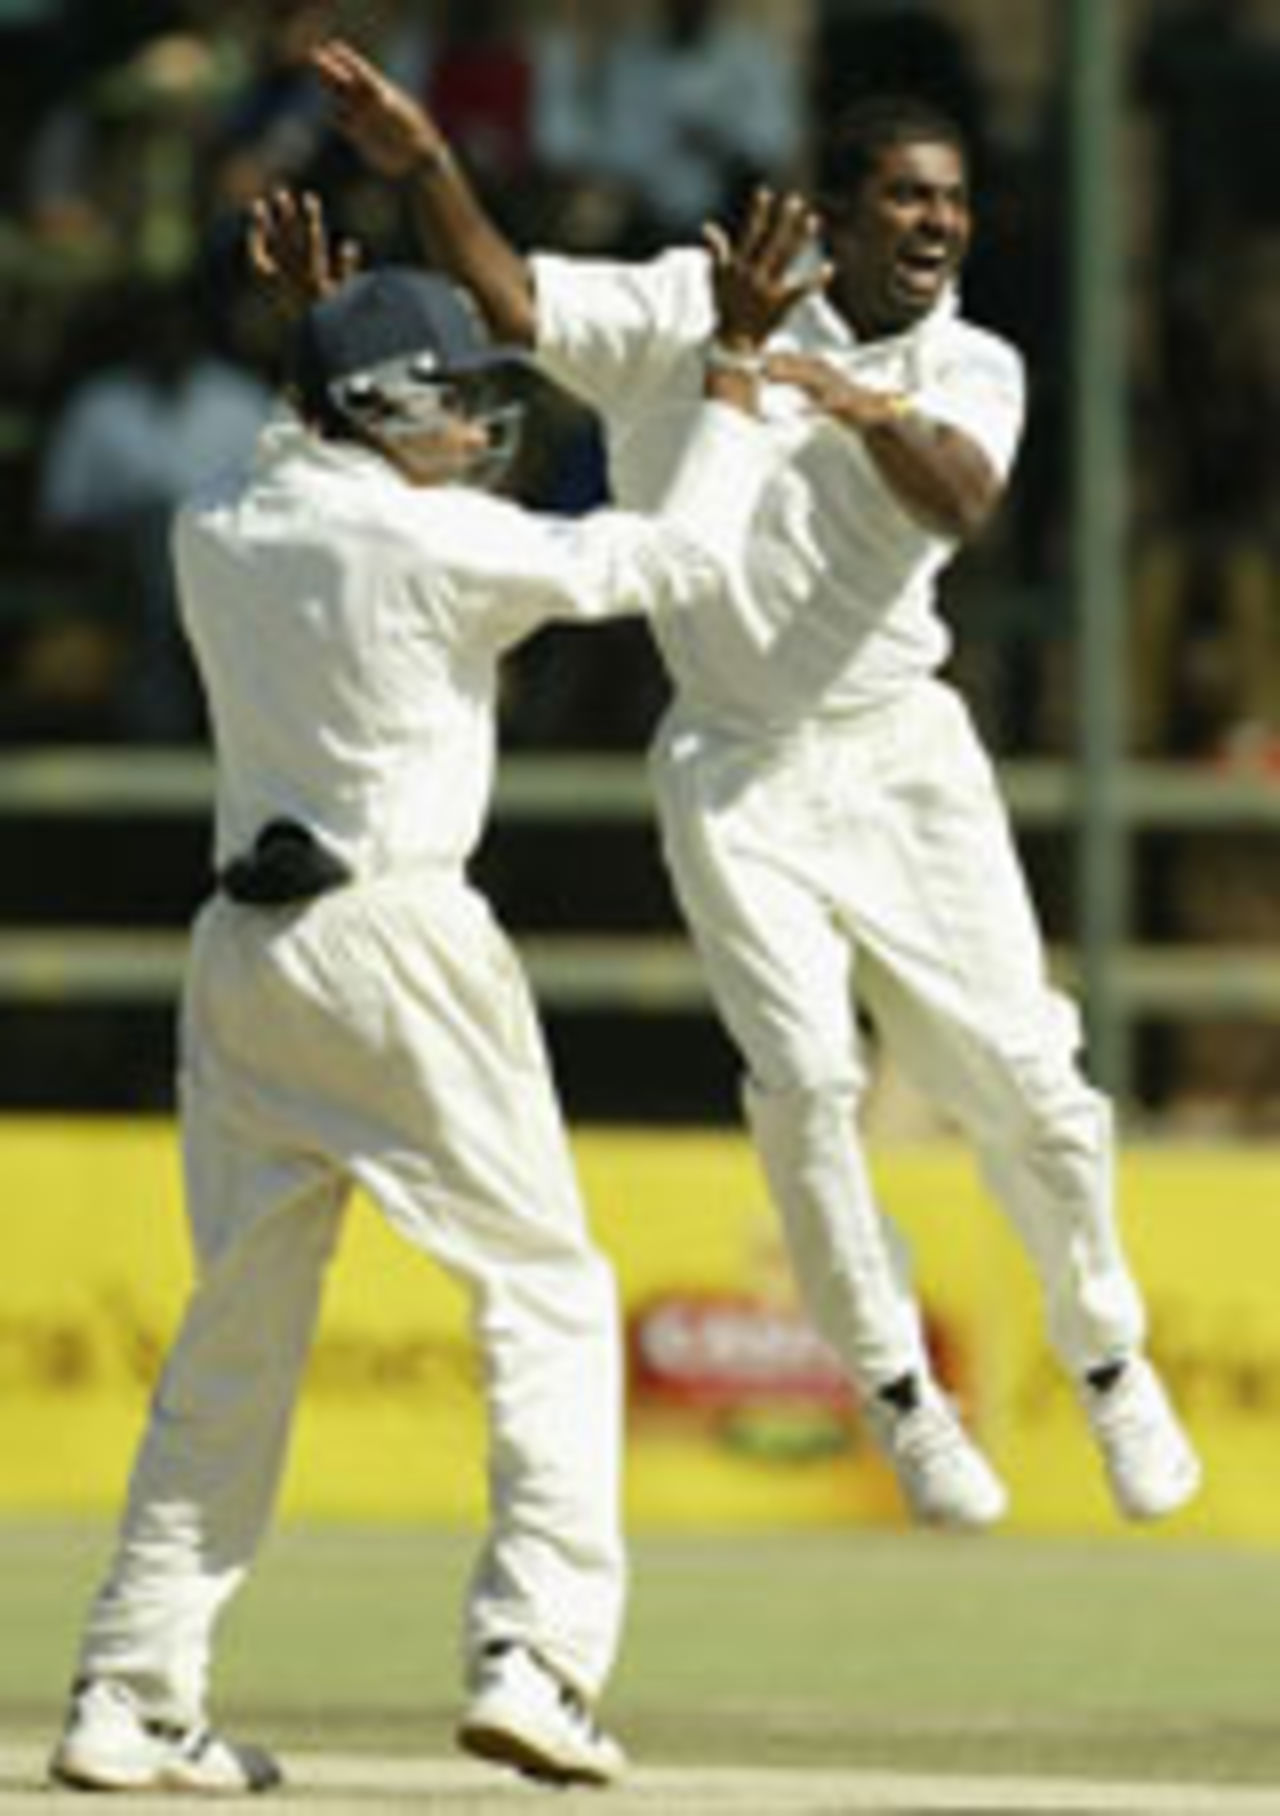 Muttiah Muralitharan celebrates the record-breaking wicket, Zimbabwe v Sri Lanka, 1st Test, Harare, May 8, 2004